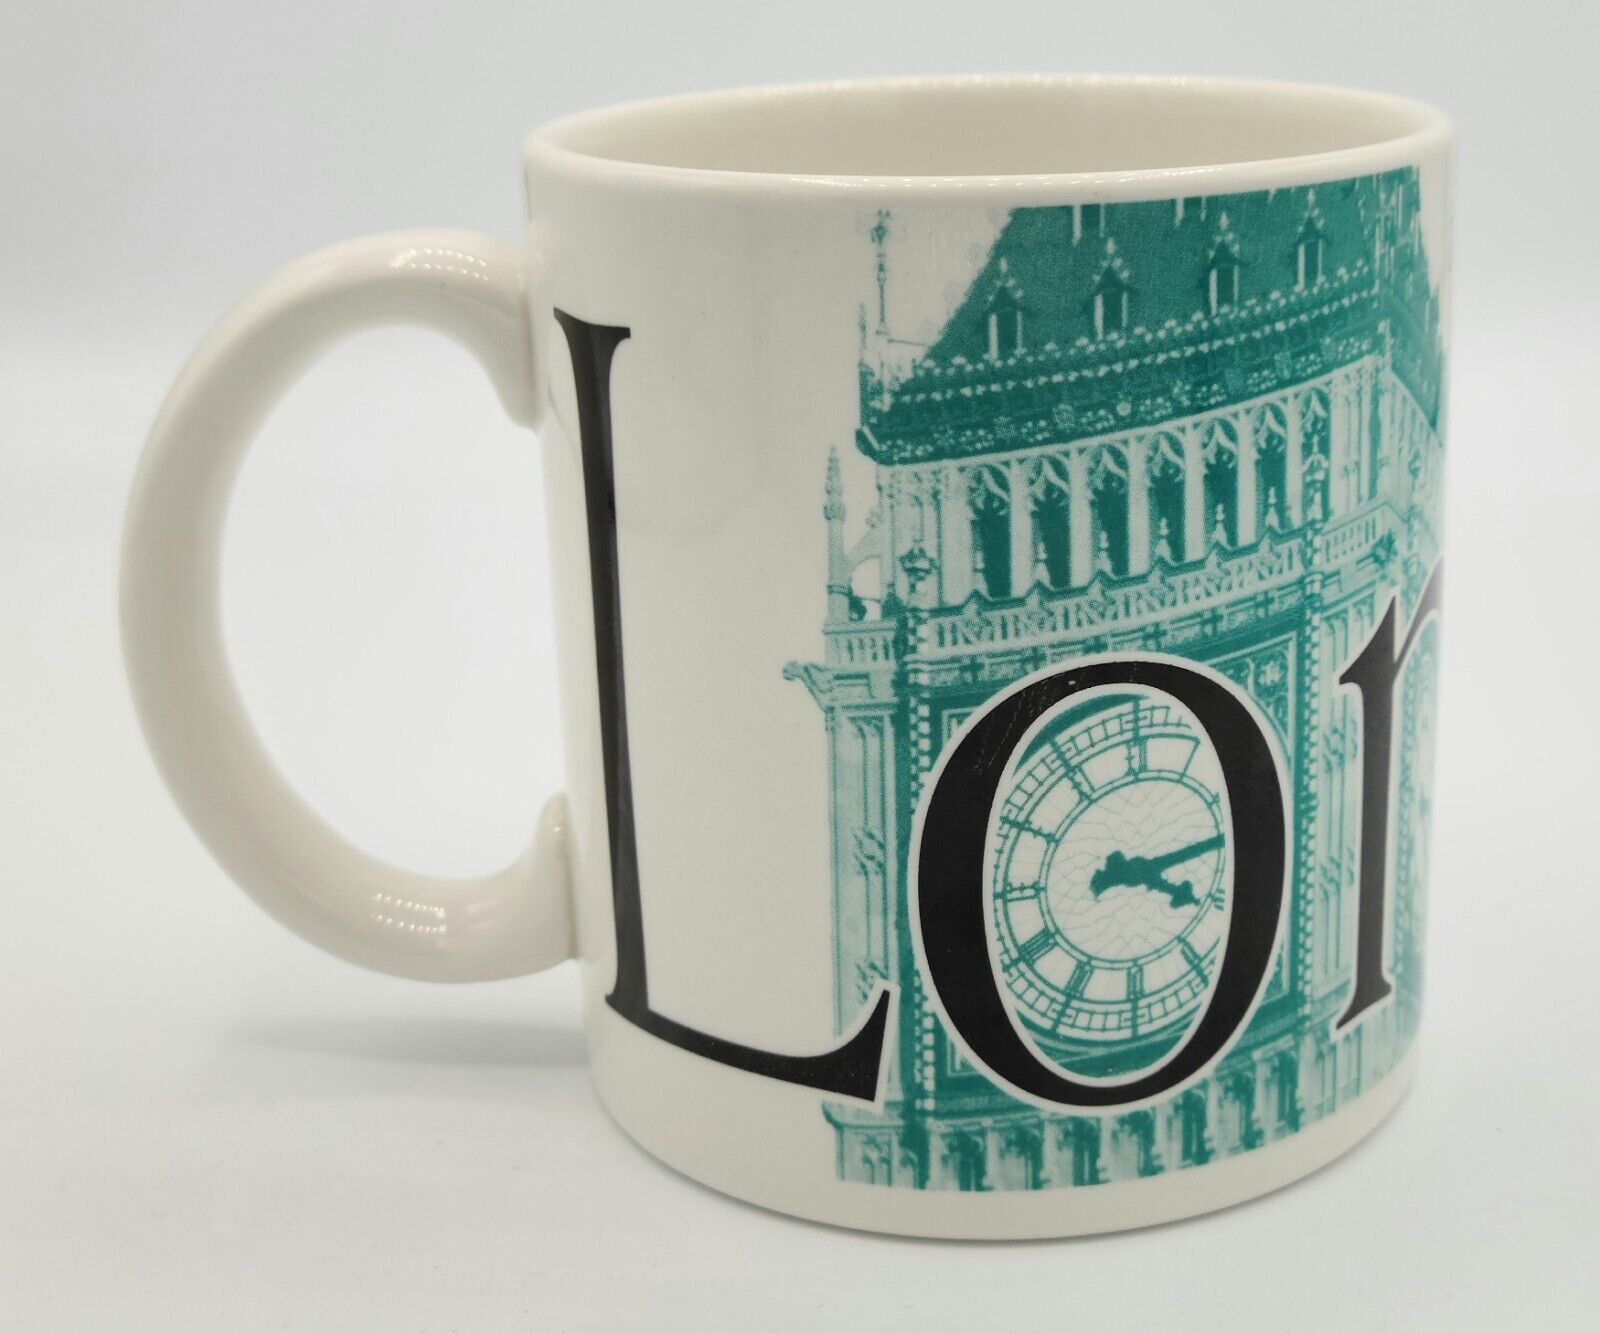 New 2002 Starbucks City Mug Collection London Ceramic Mug